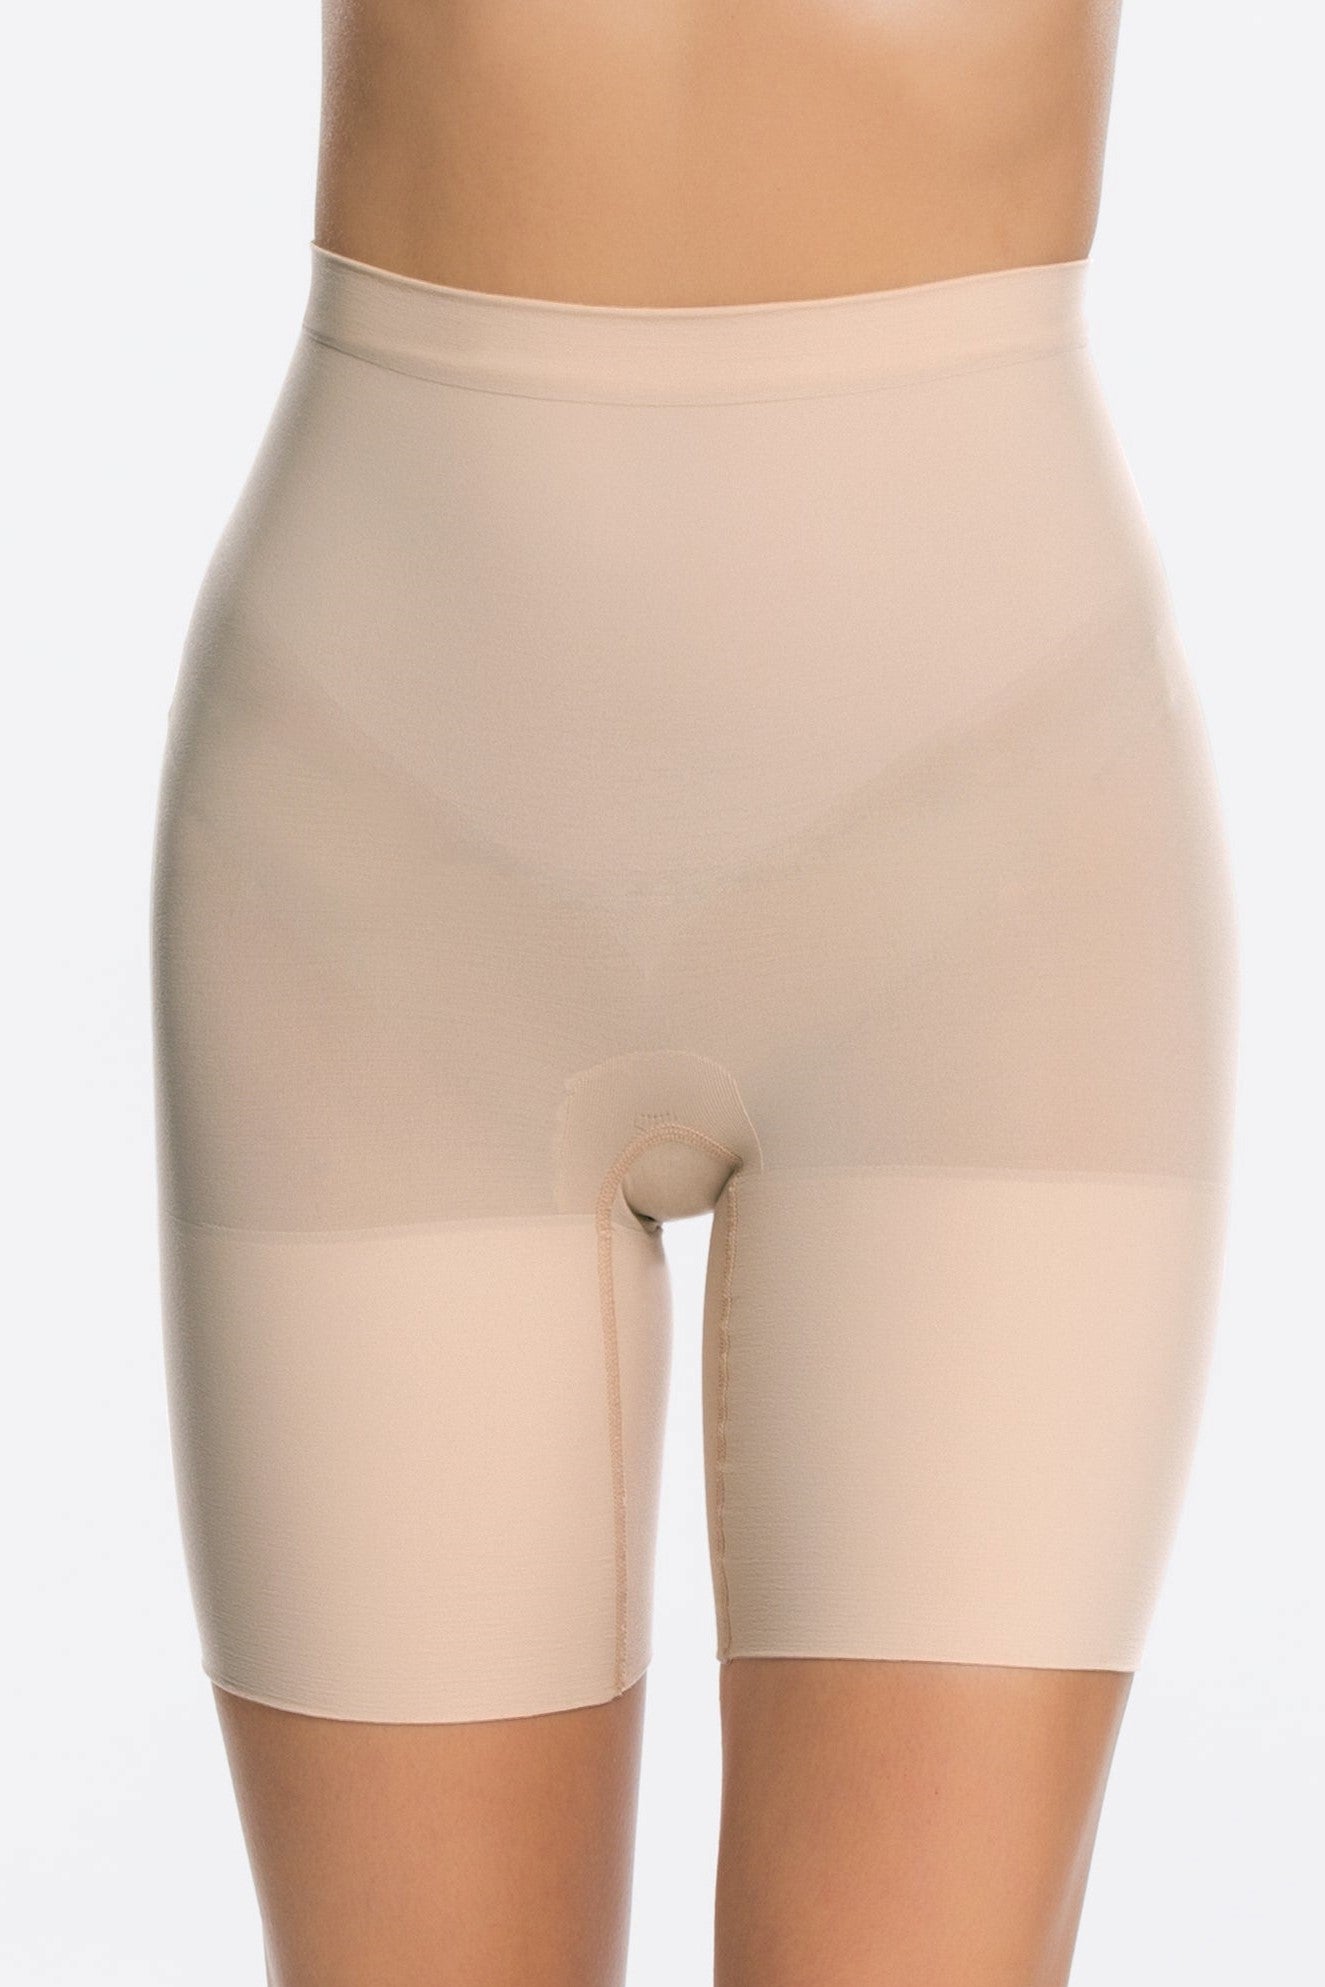 SPANX Power Shorts/Panties SALE Size S